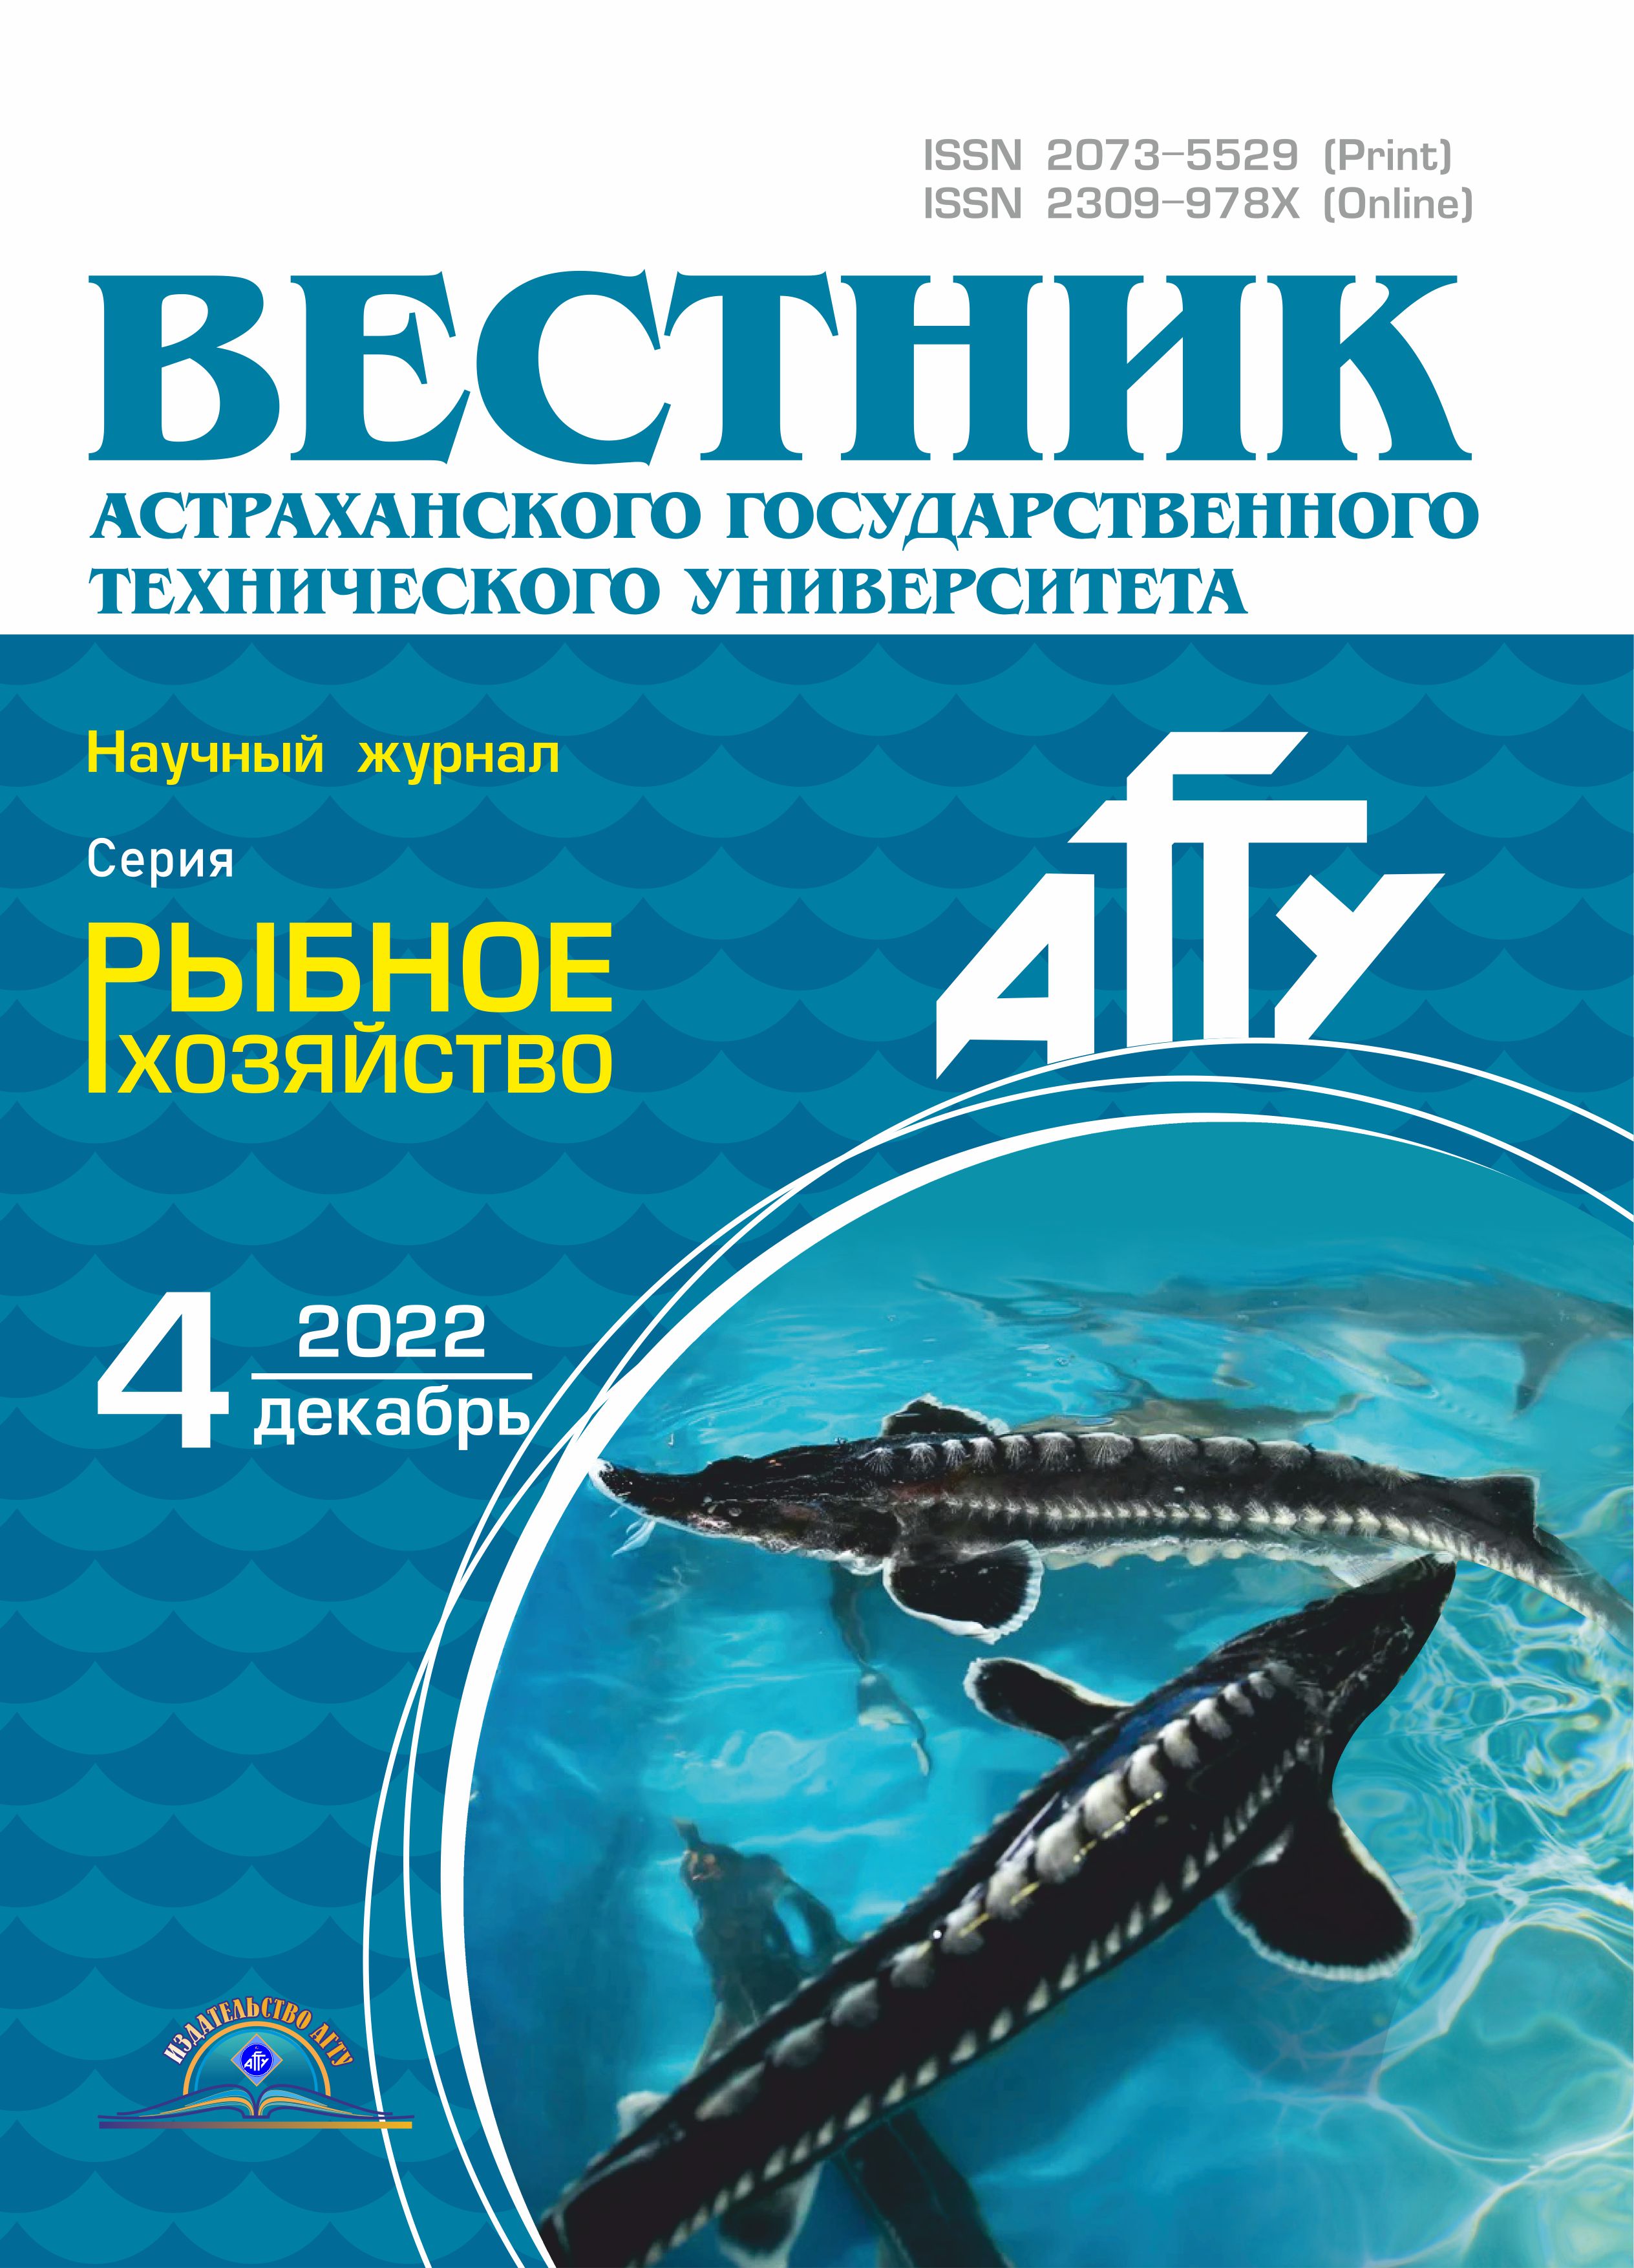                         Vestnik of Astrakhan State Technical University. Series: Fishing industry
            